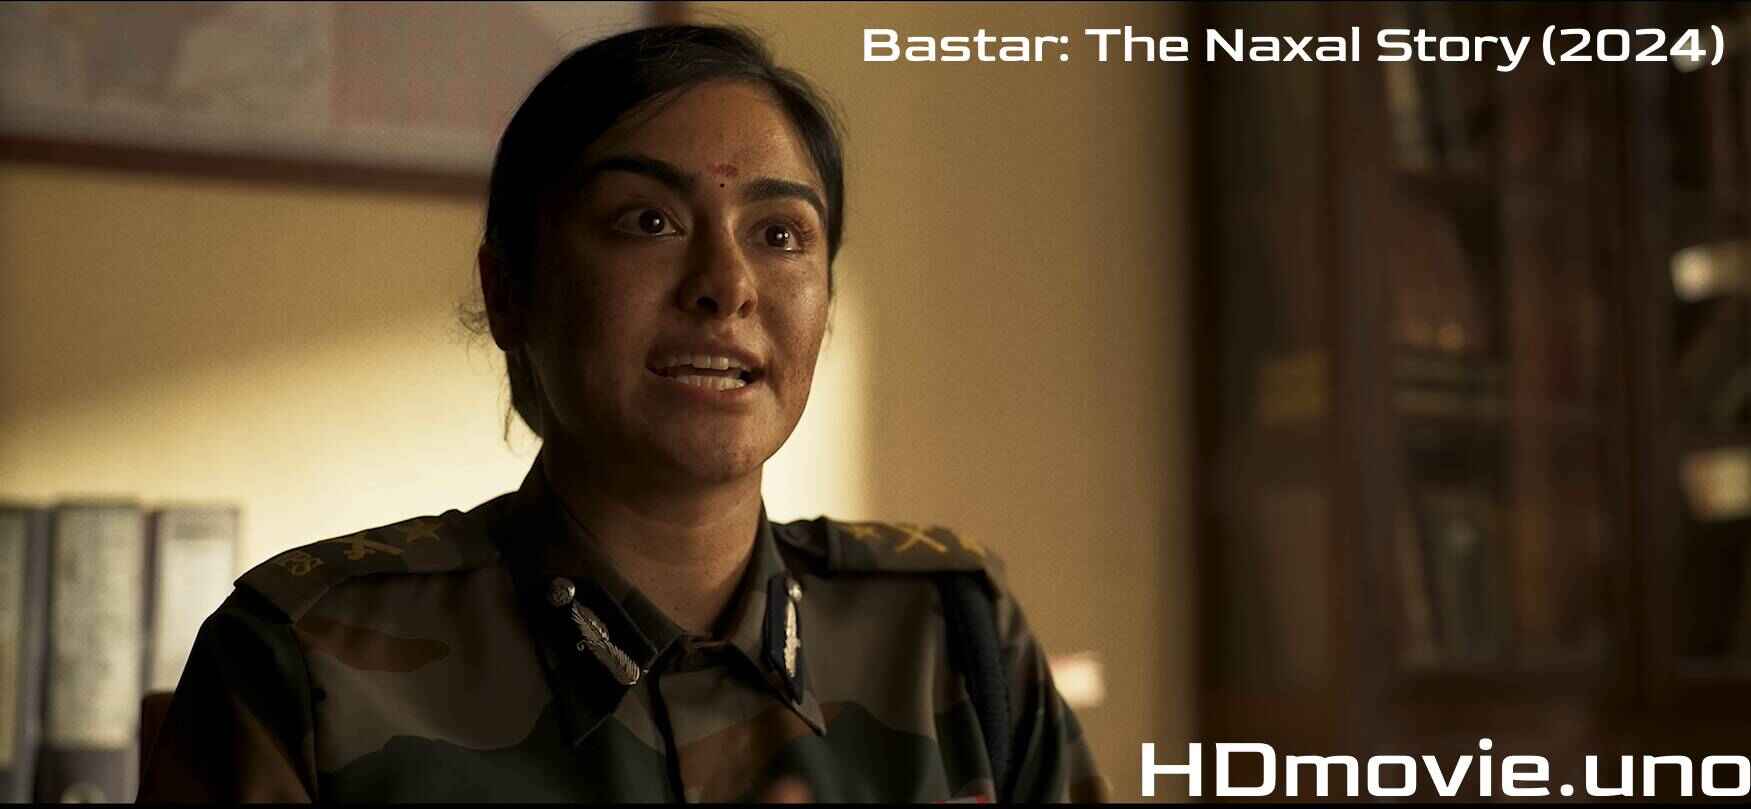 Bastar-The-Naxal-Story